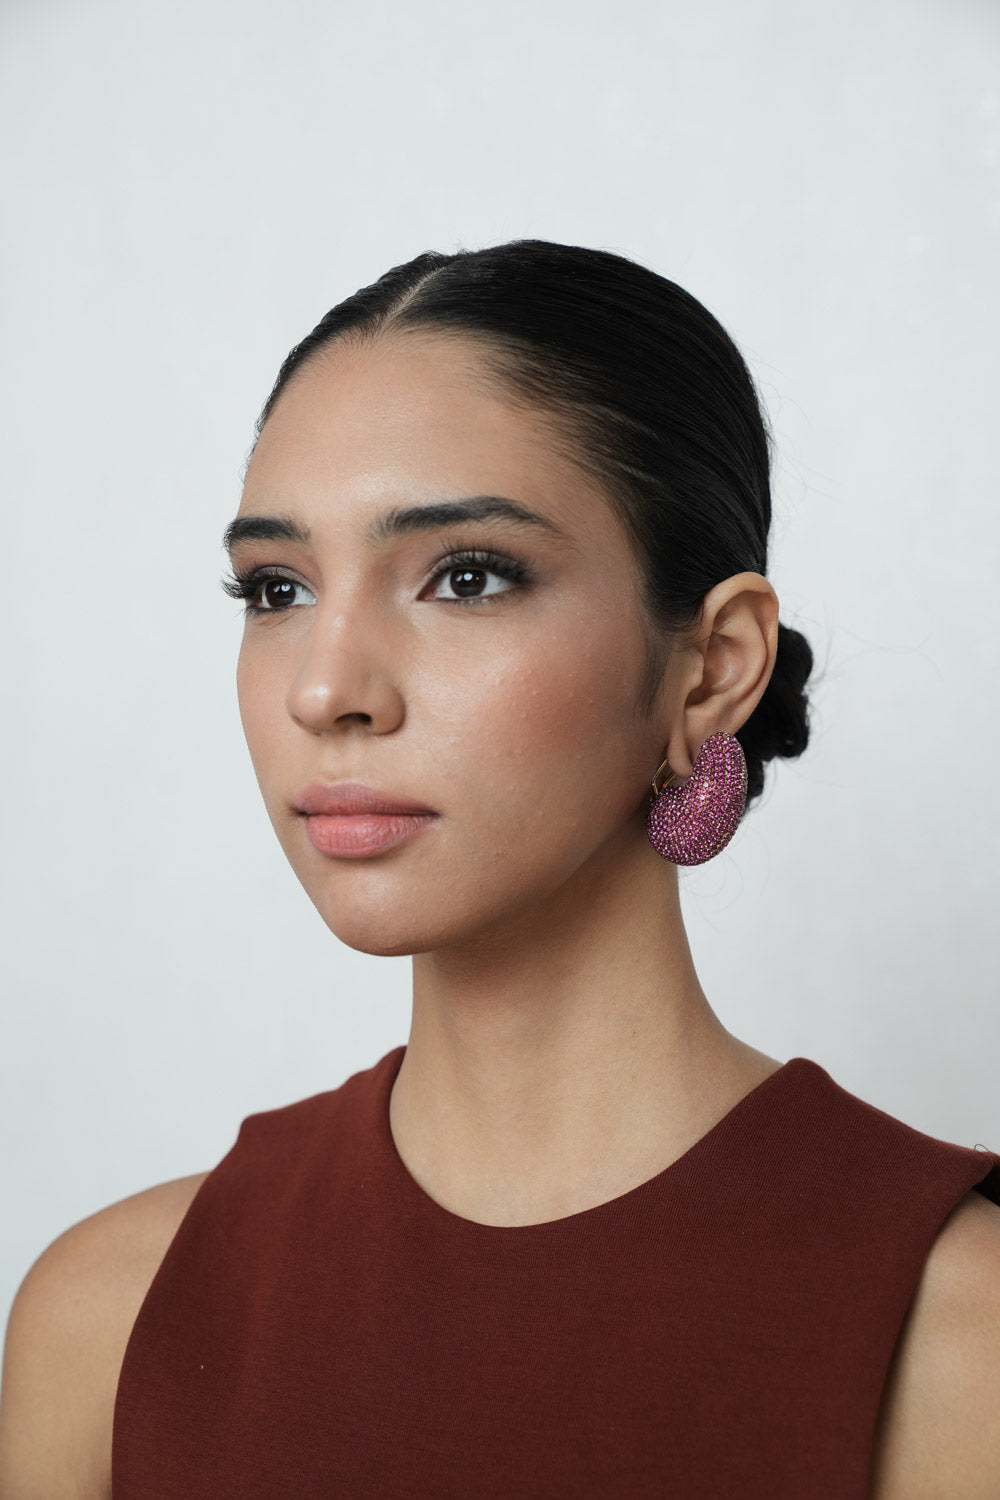 Amama,Kaju Earrings In Hot Pink